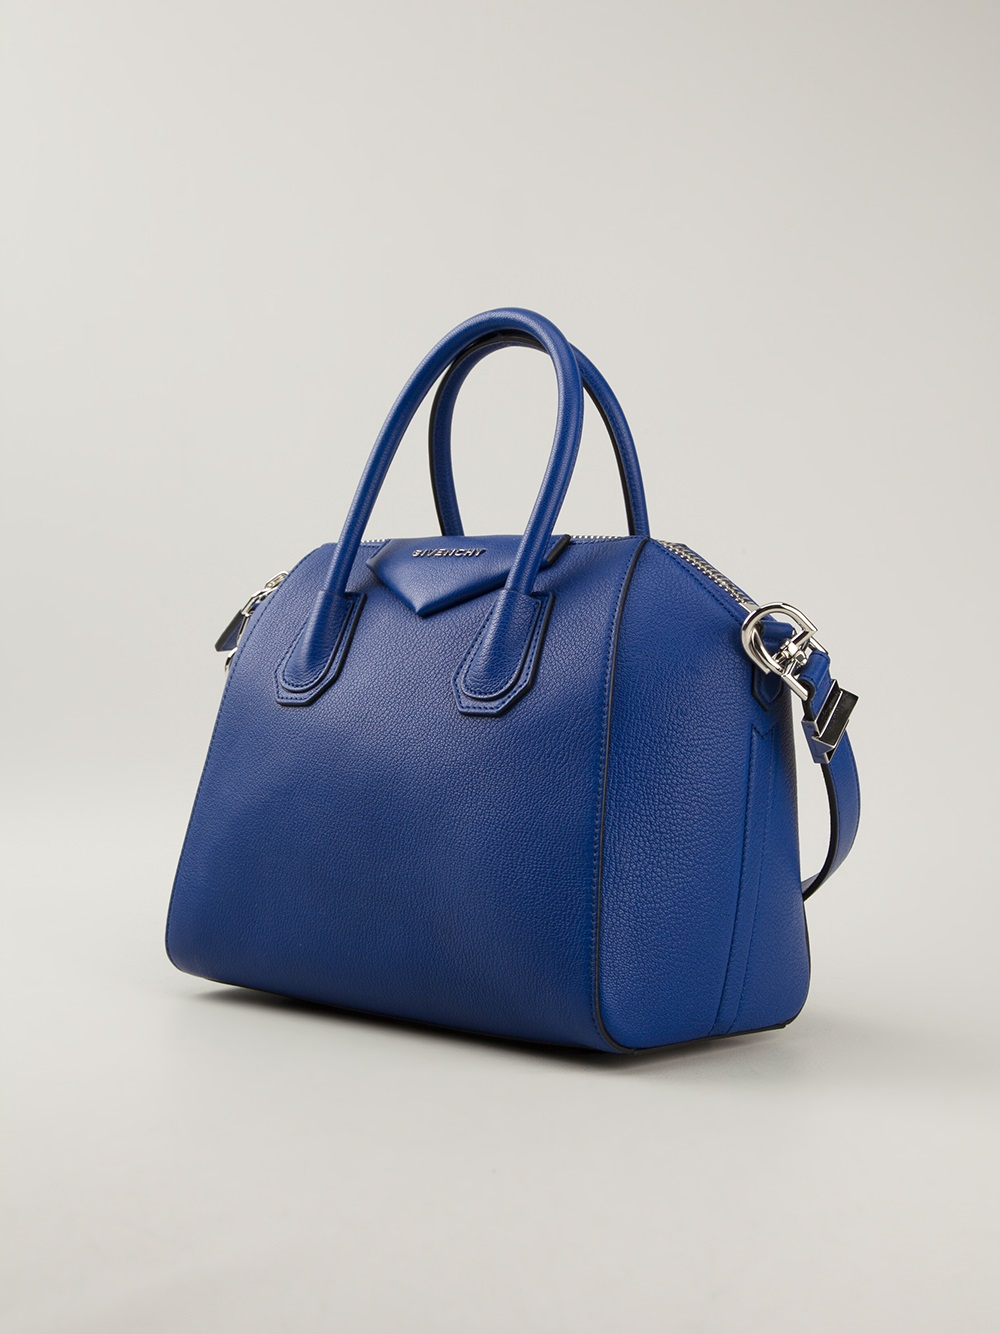 Lyst - Givenchy Antigona Tote Bag in Blue